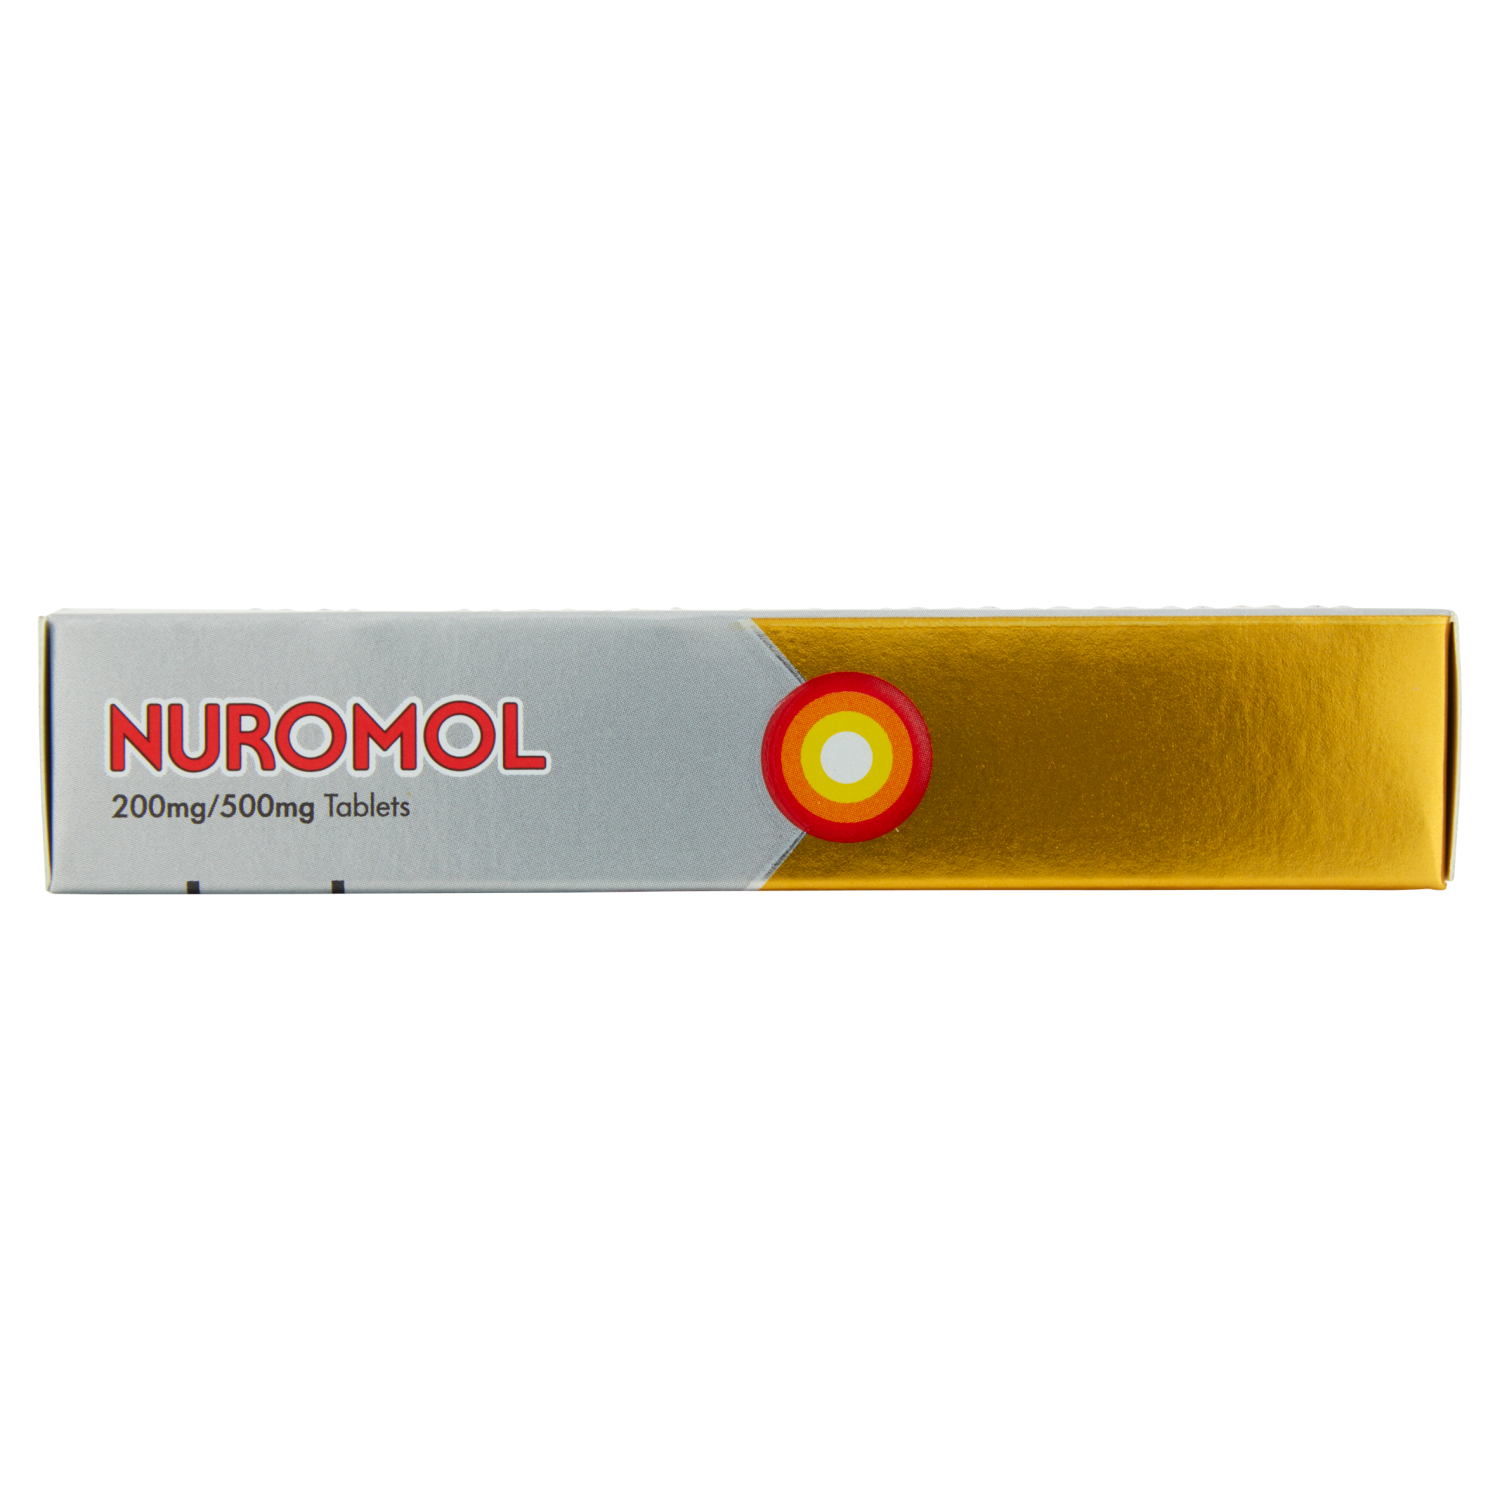 Nuromol 200mg/500mg Tablets (24 Tablets)